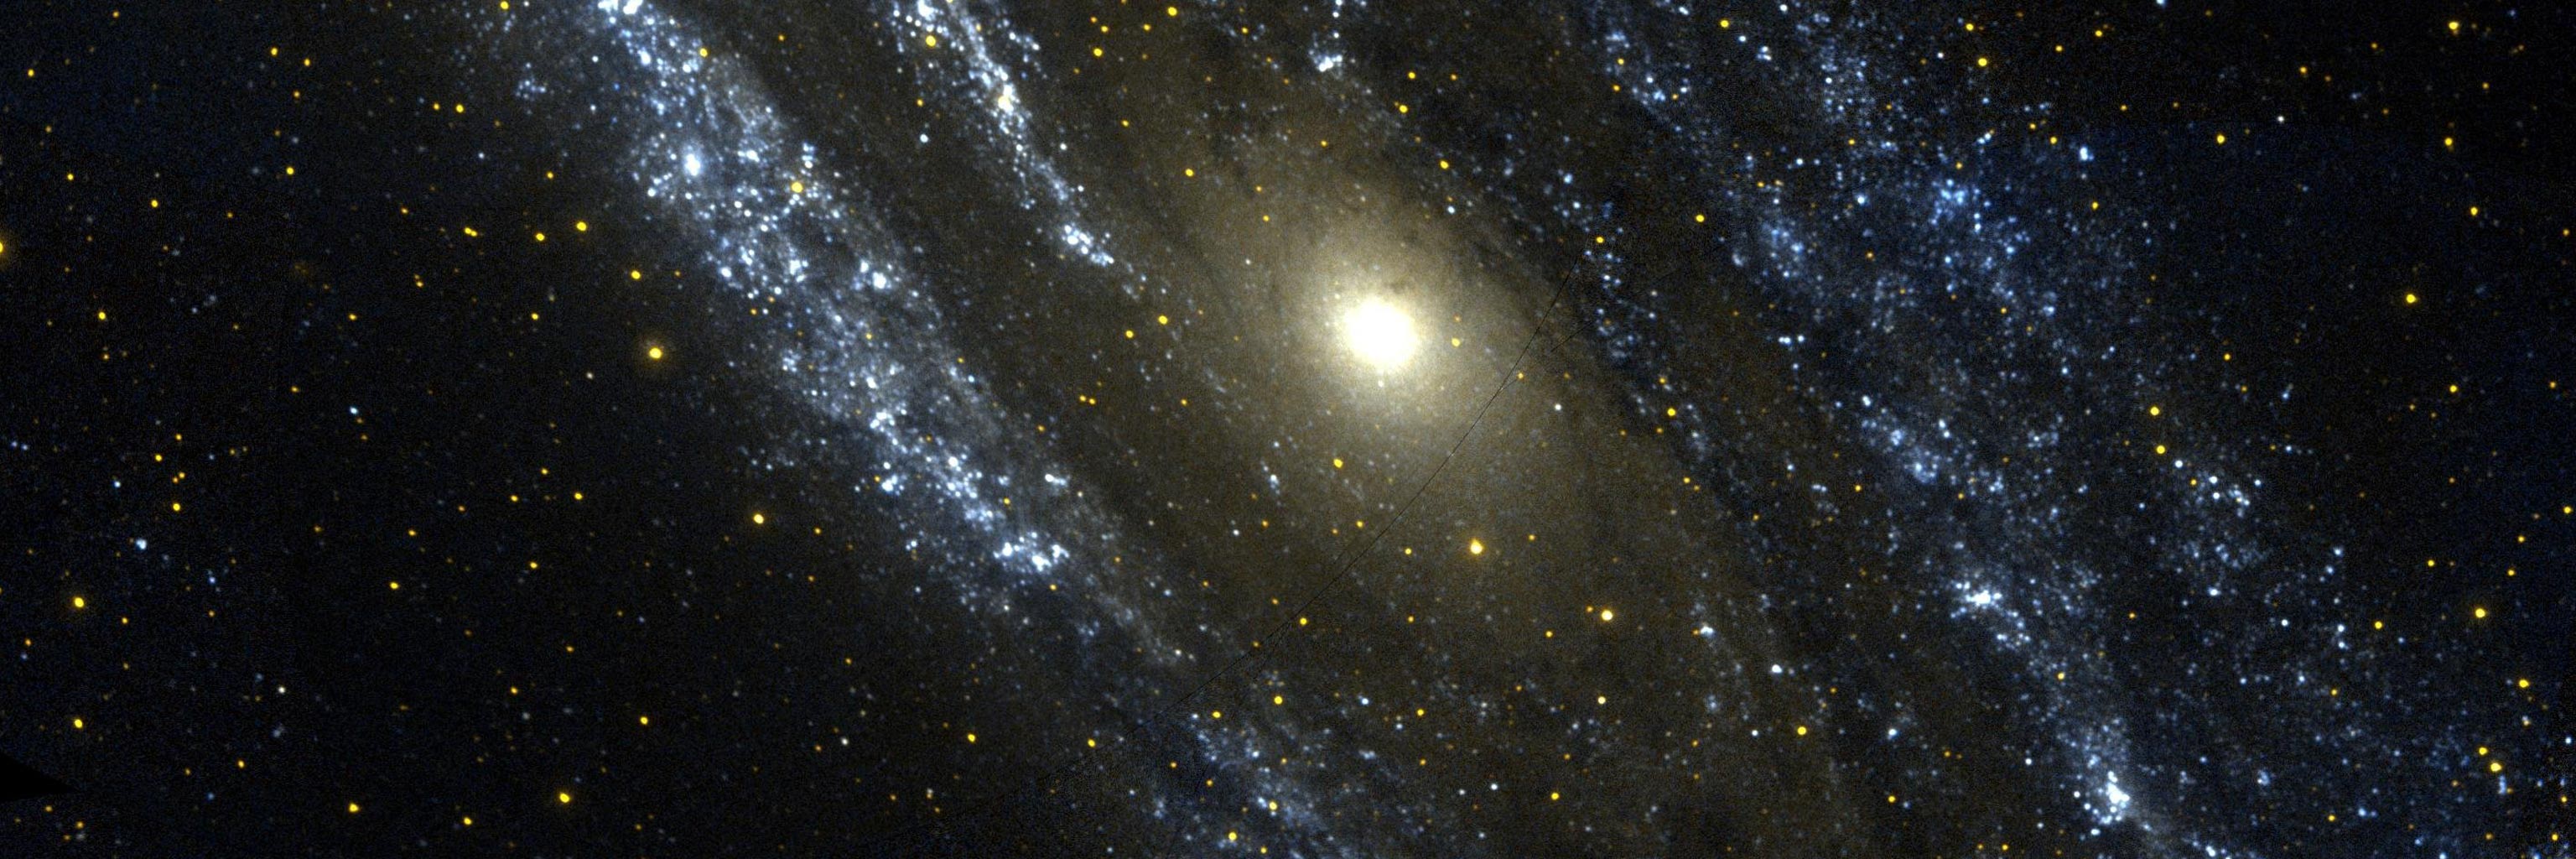 Andromeda star system